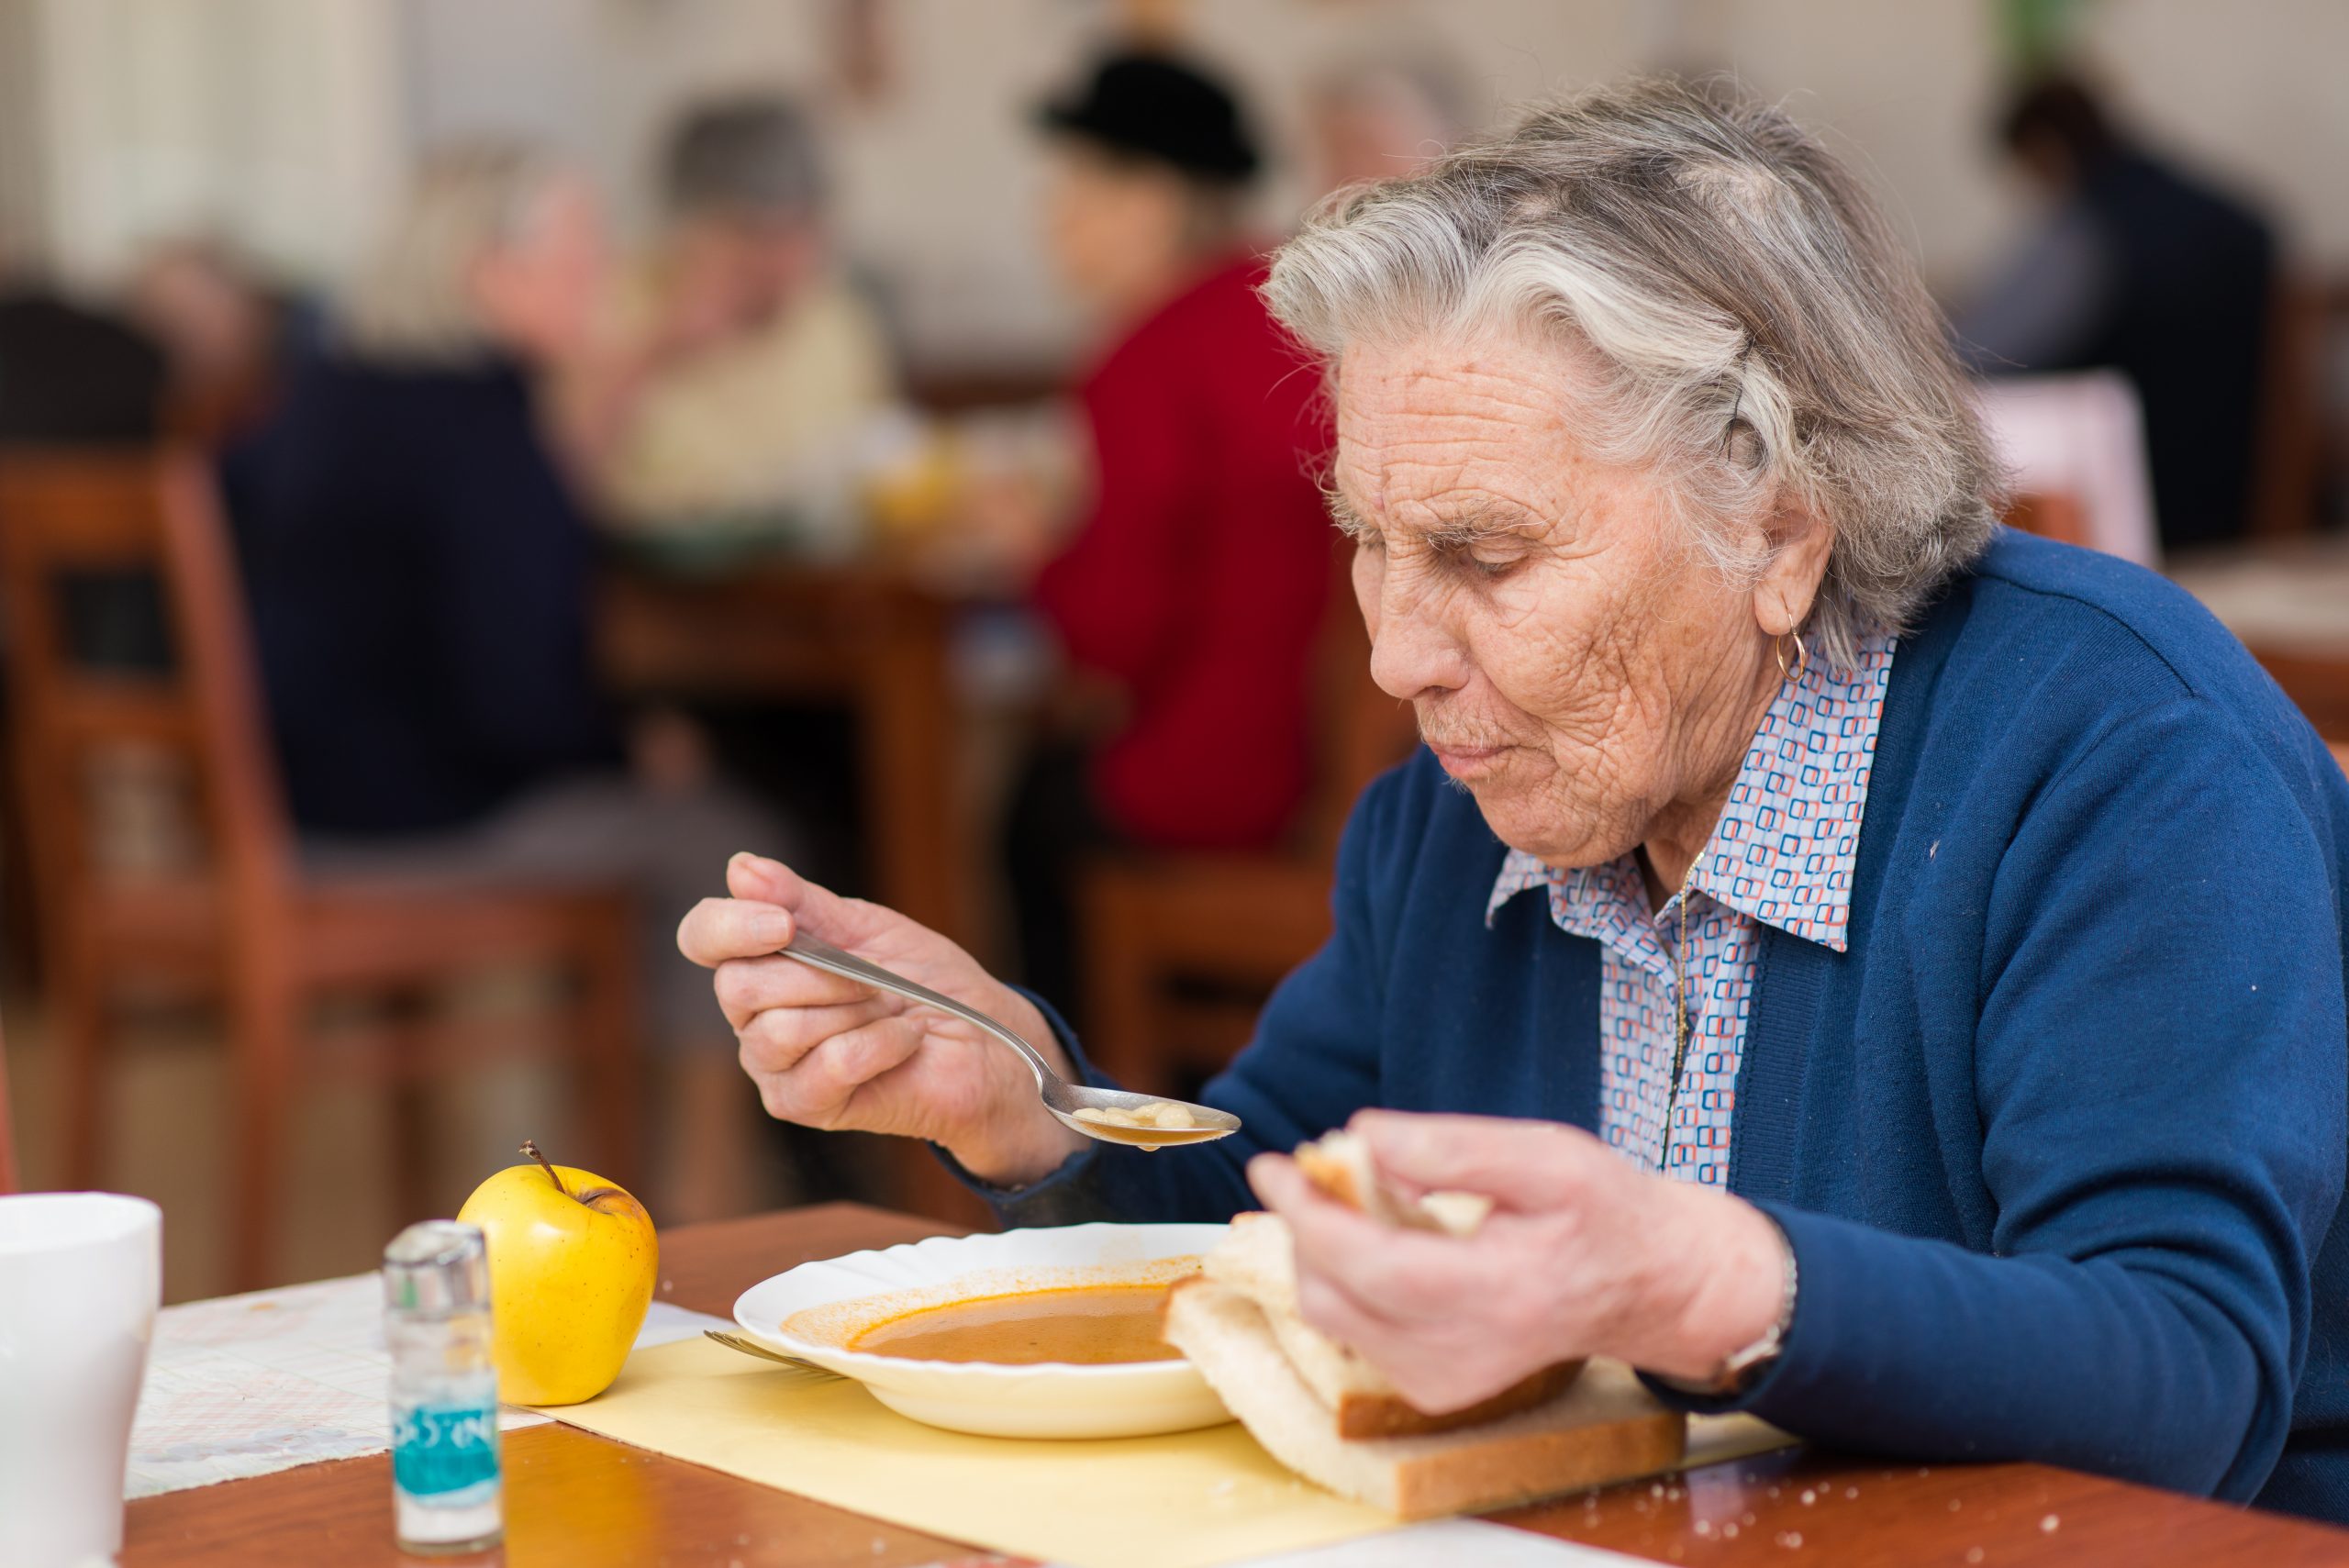 elderly woman eating